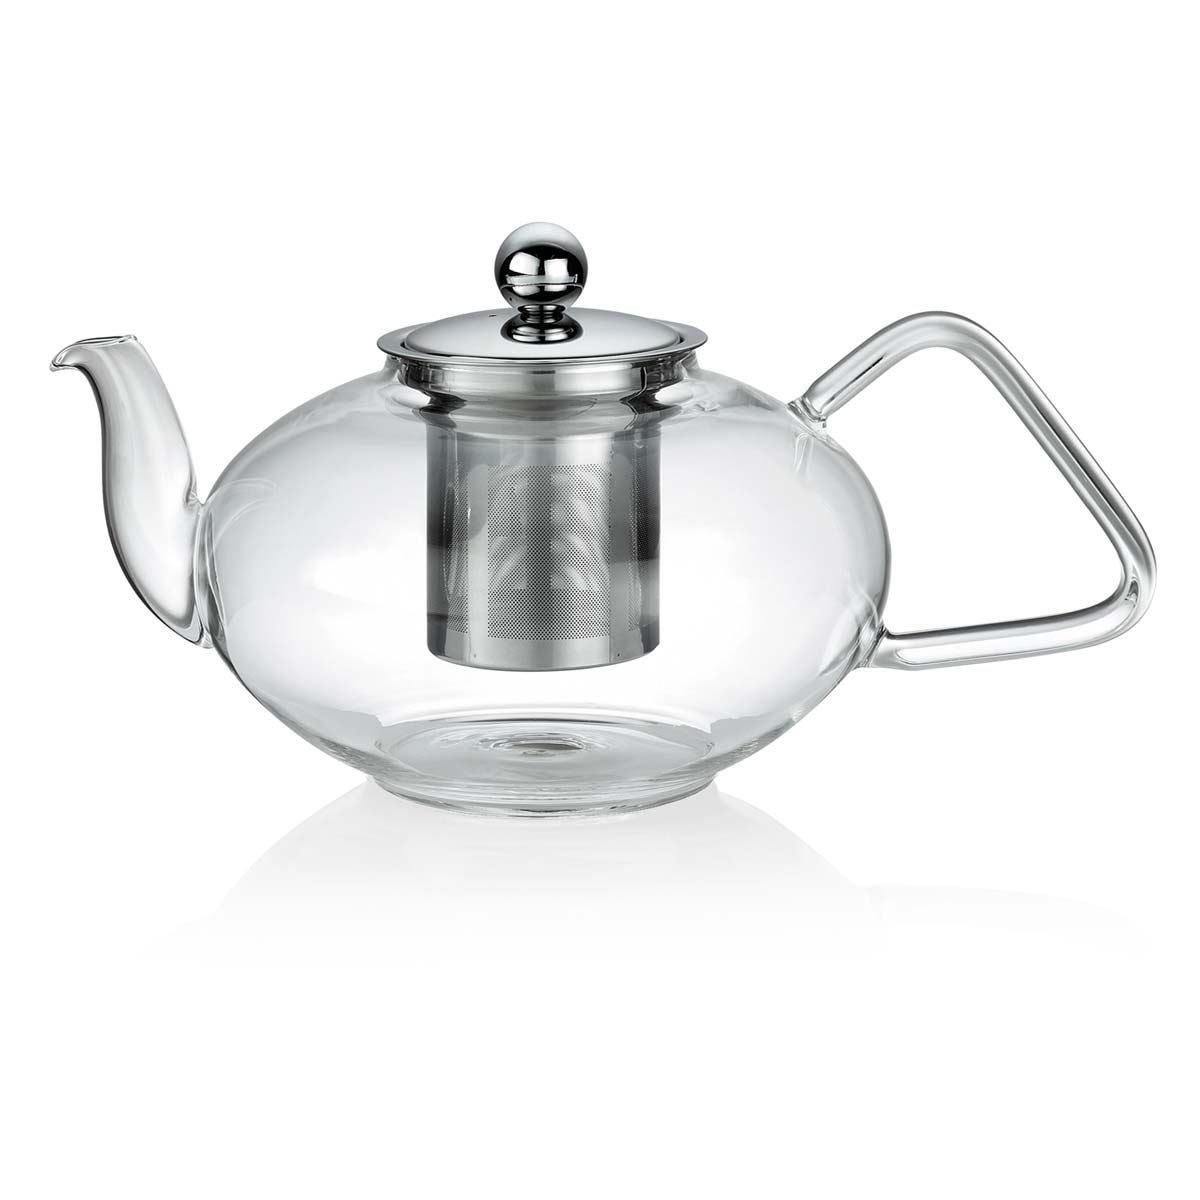 Küchenprofi TEA Teekanne TIBET - Filter aus rostfreiem Stahl 1,2 L